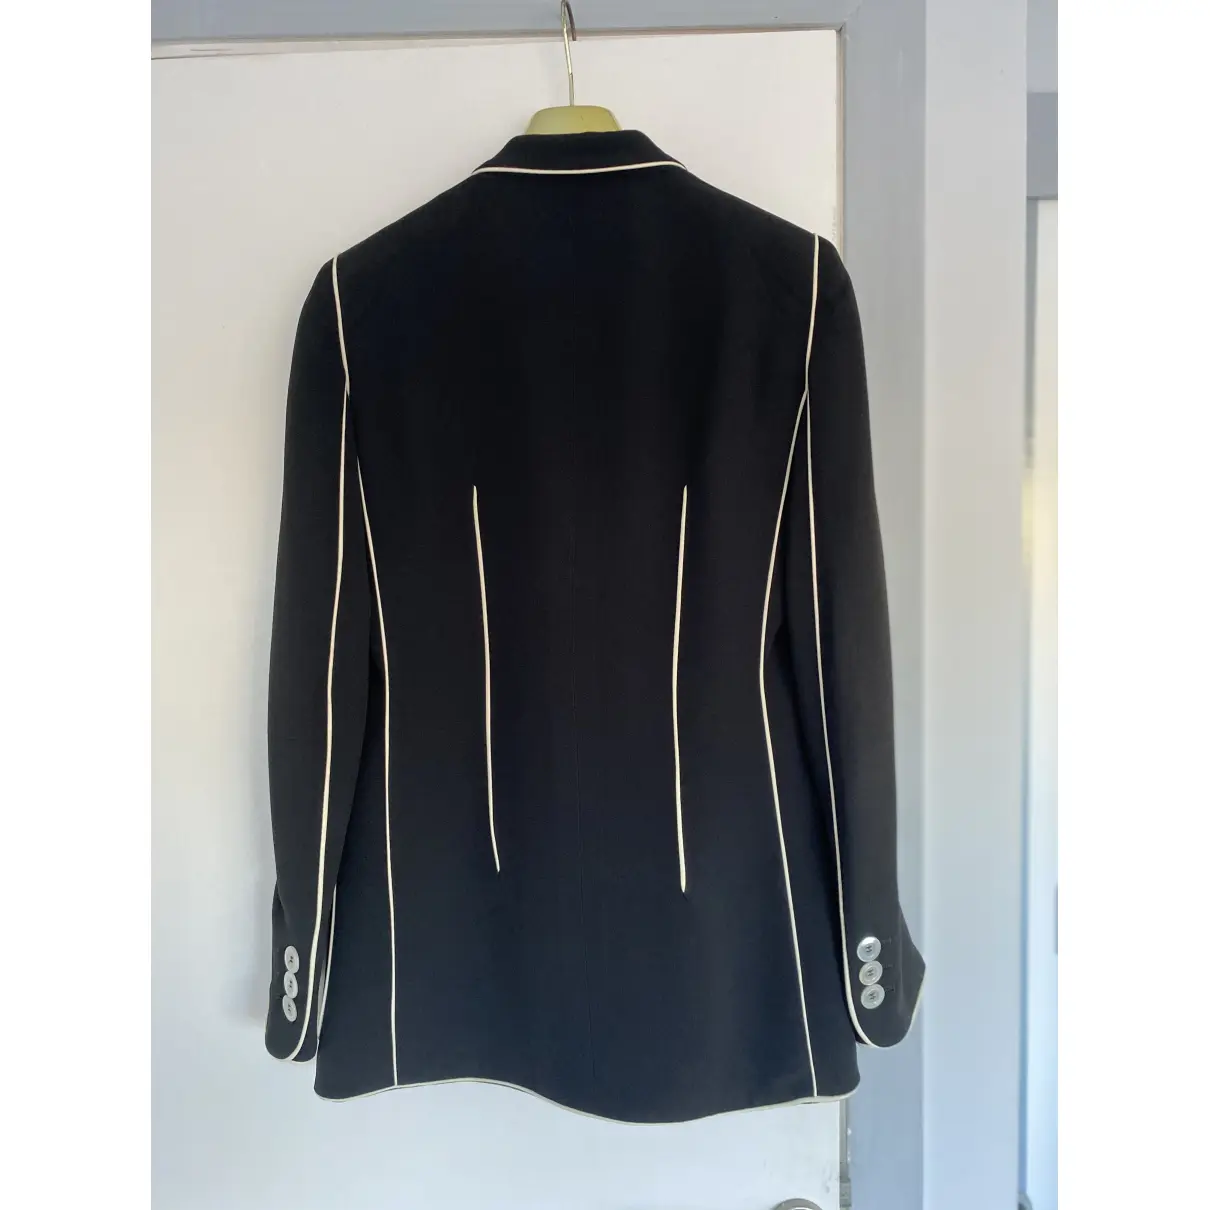 Buy Moschino Suit jacket online - Vintage